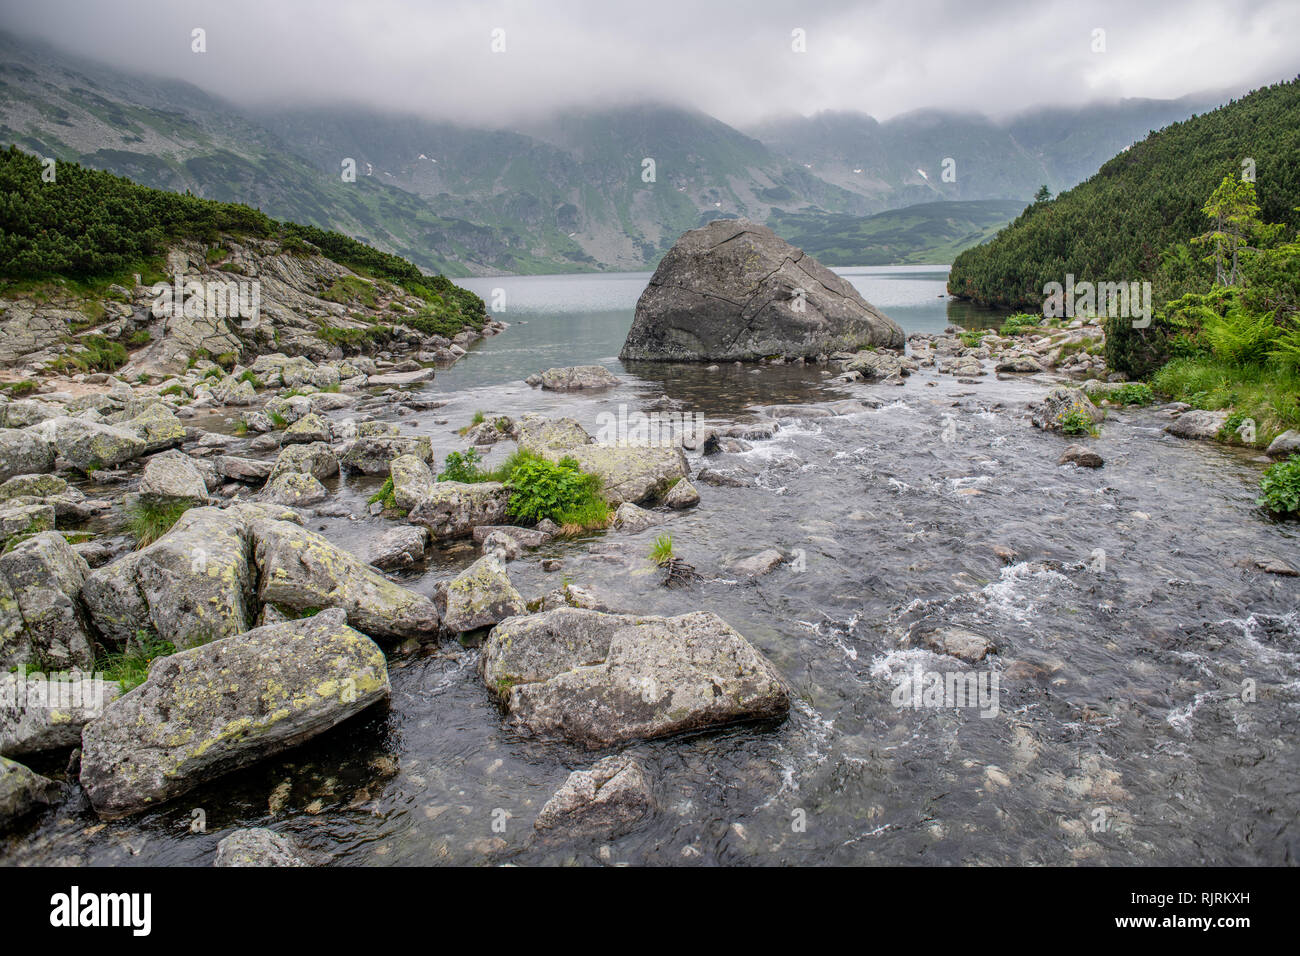 The Poland Valley of Five Lakes in the Tatra National Park,Lesser Poland Voivodeship, Poland. Stock Photo